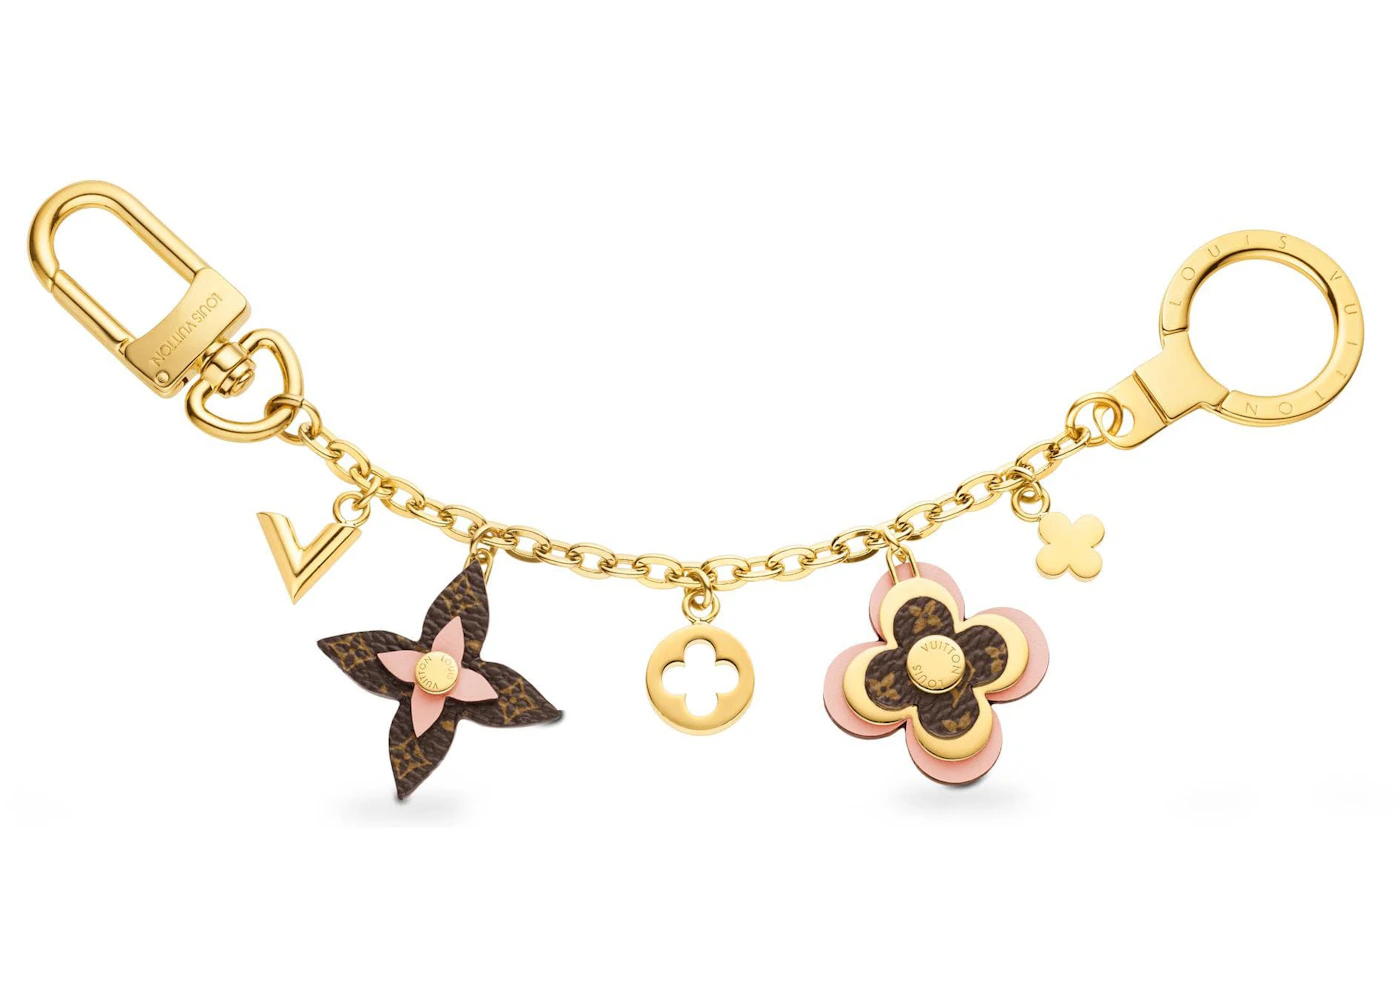 Louis Vuitton Inspired Key Chain- Brown Flower